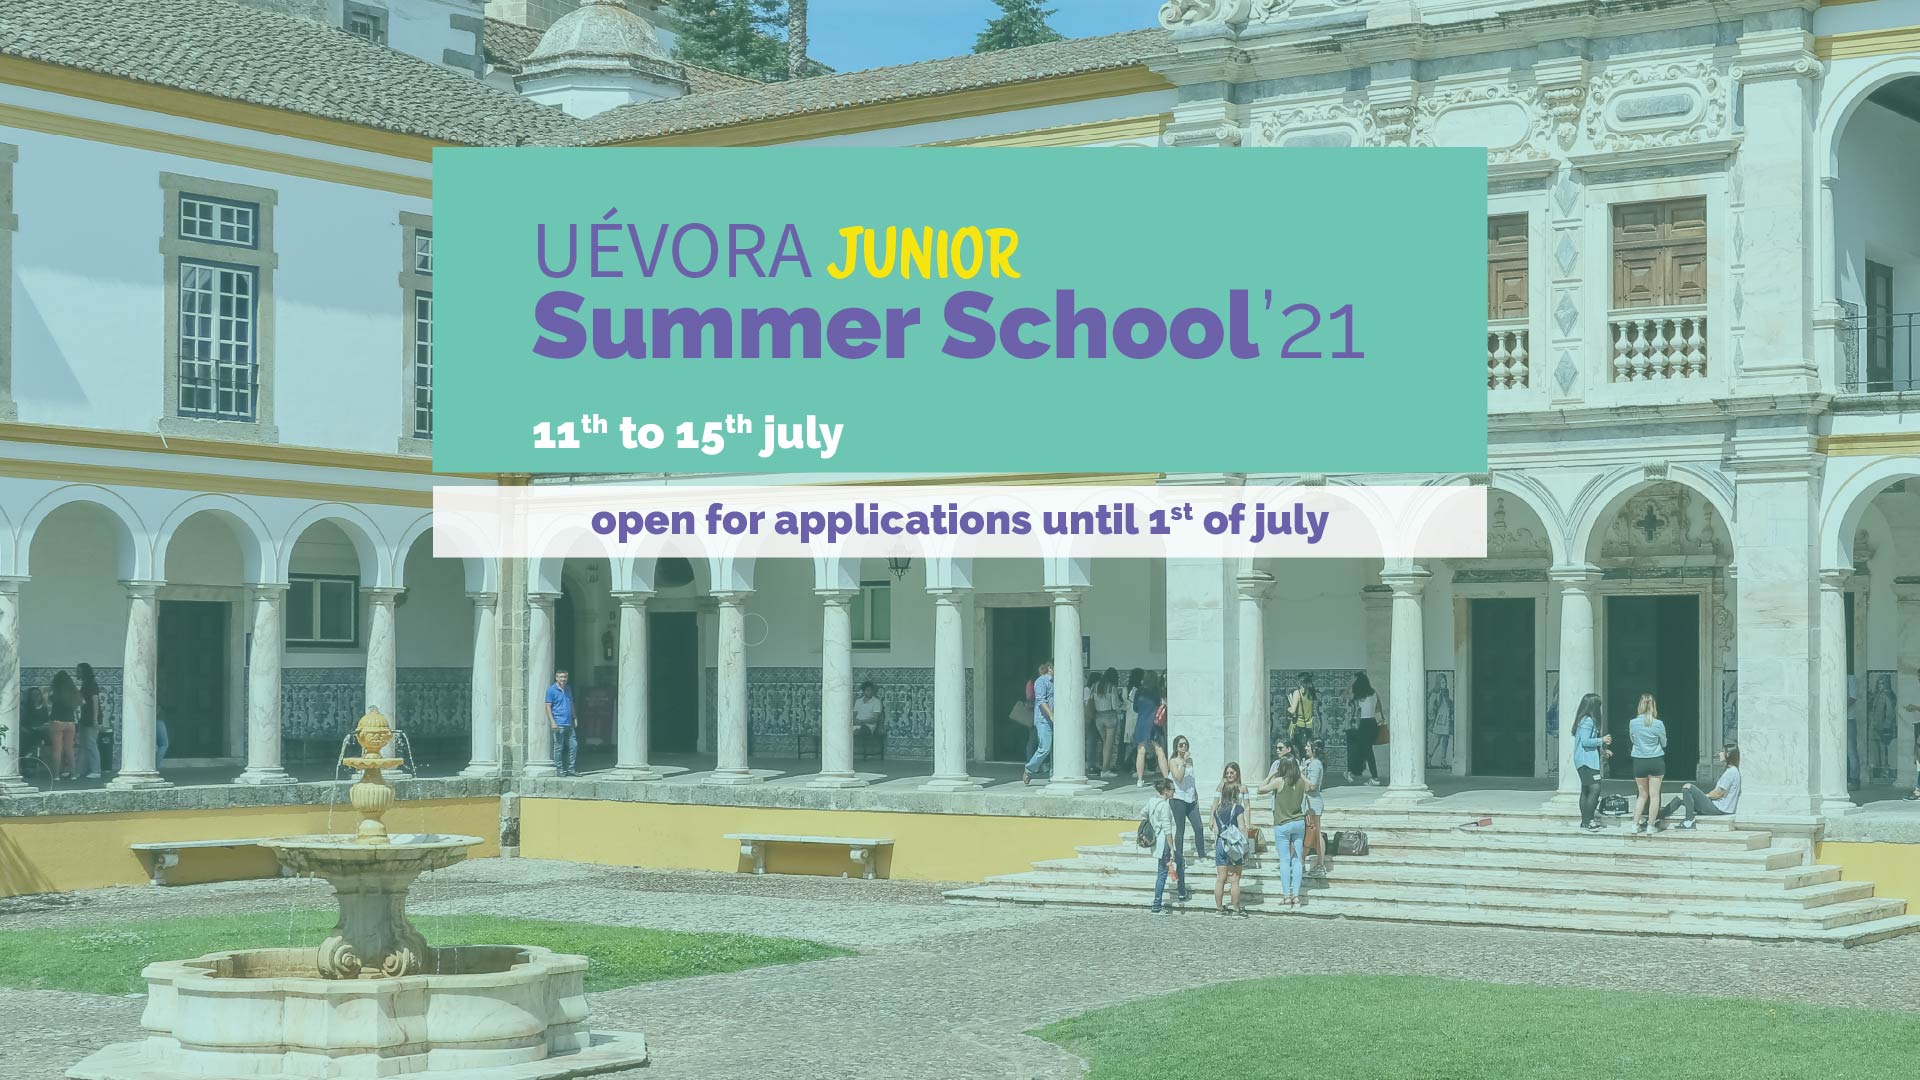 UÉvora Junior Summer School